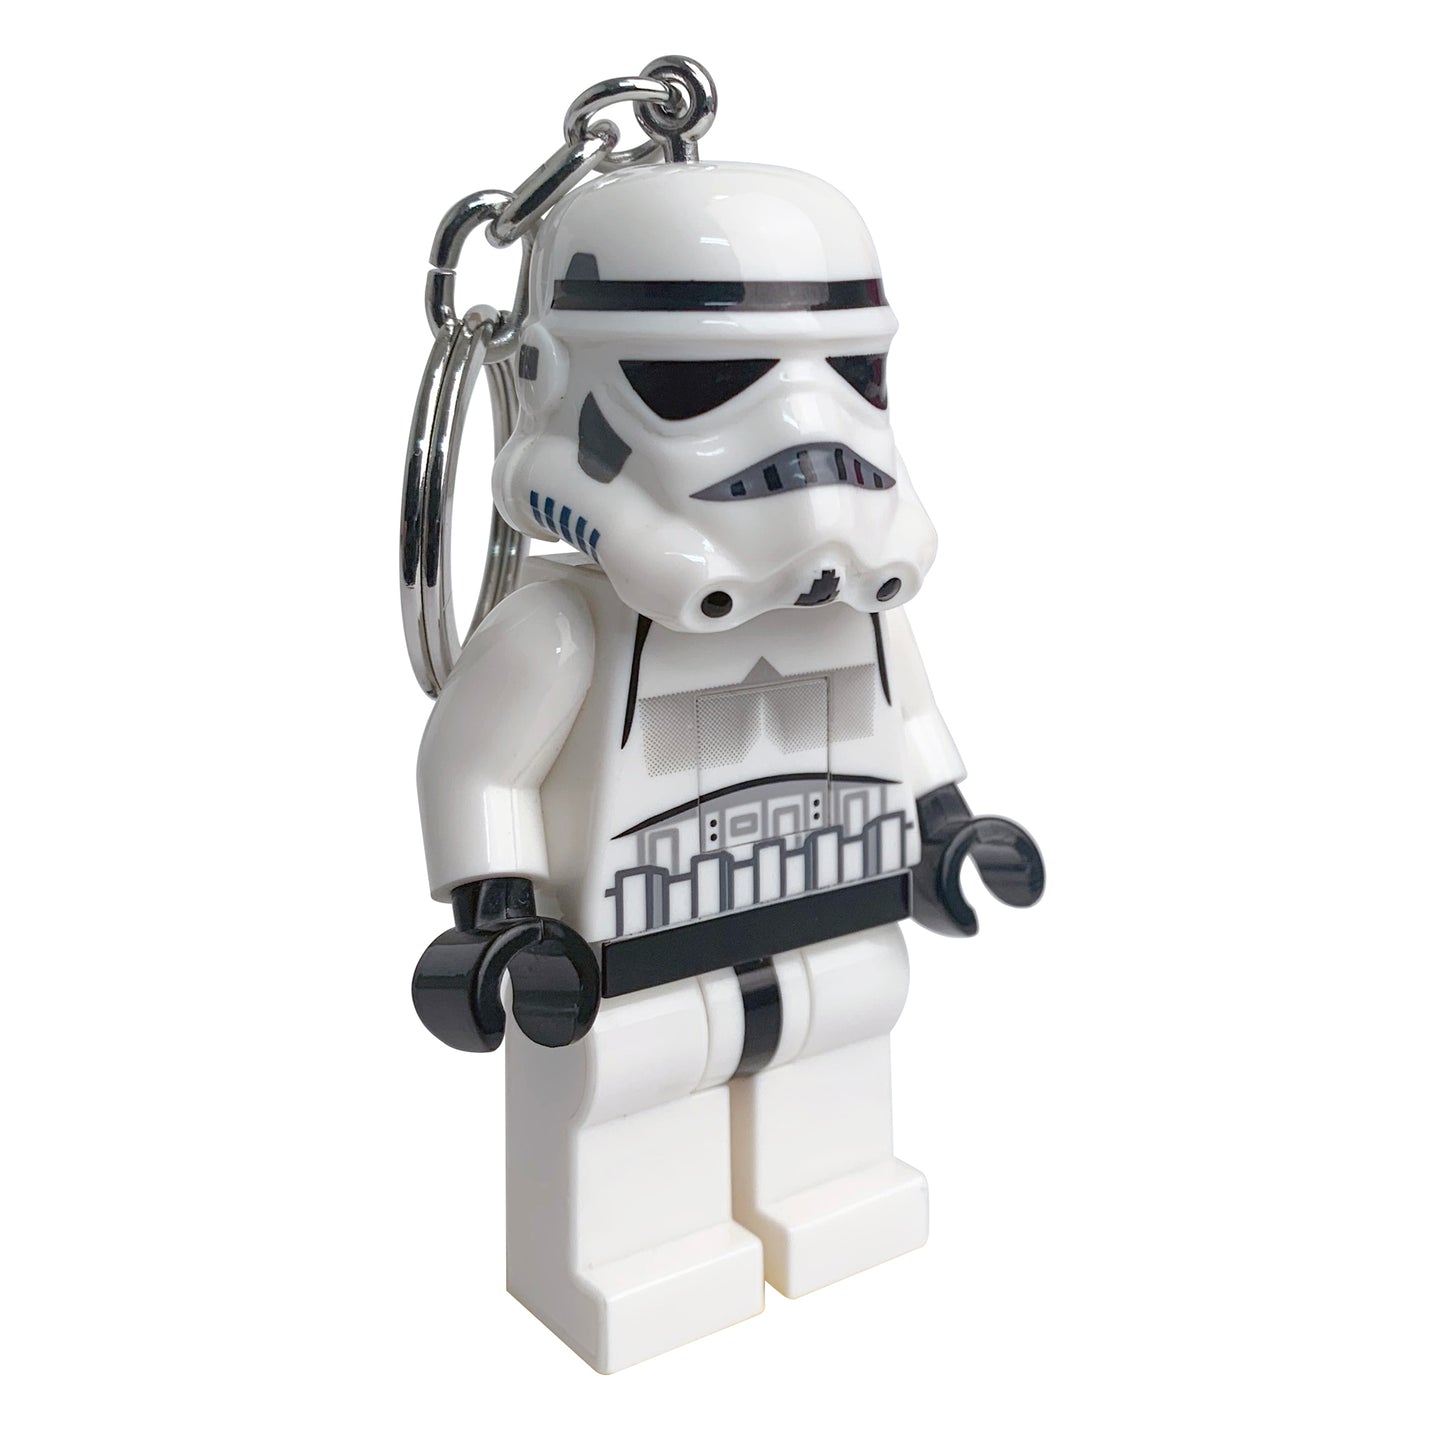 LEGO Star Wars The Stormtrooper LED Keychain Light